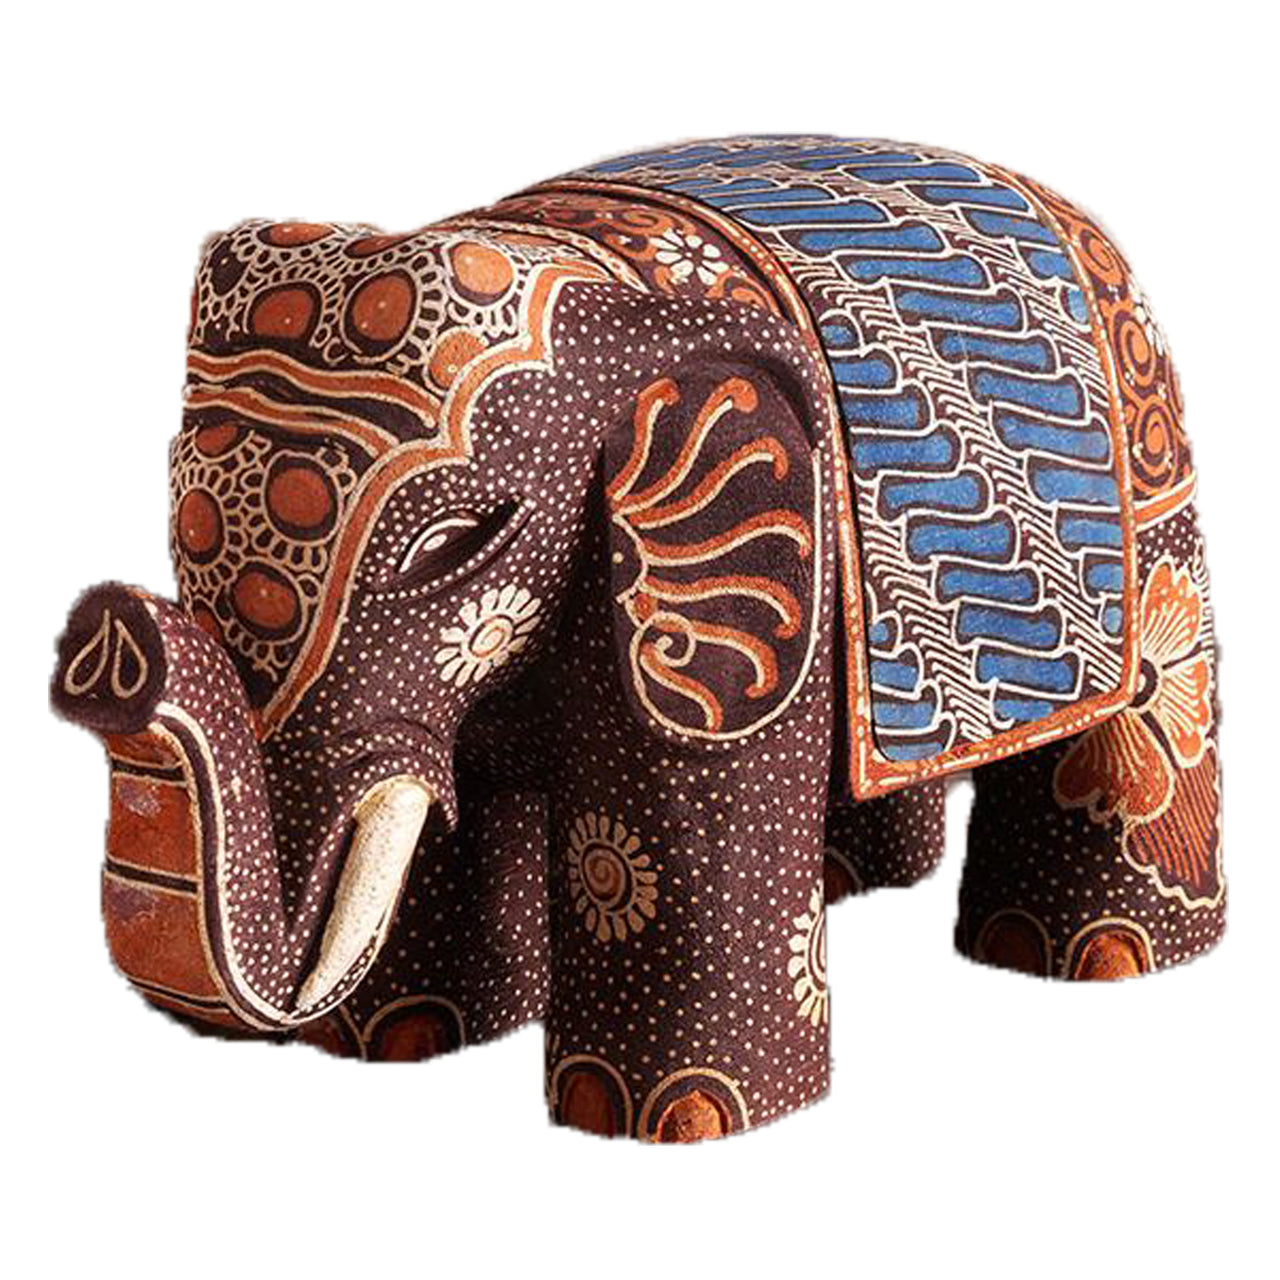 Brown Batik Elephant Statue Hand Crafted Wood Animal Tabletop or Shelf Decor